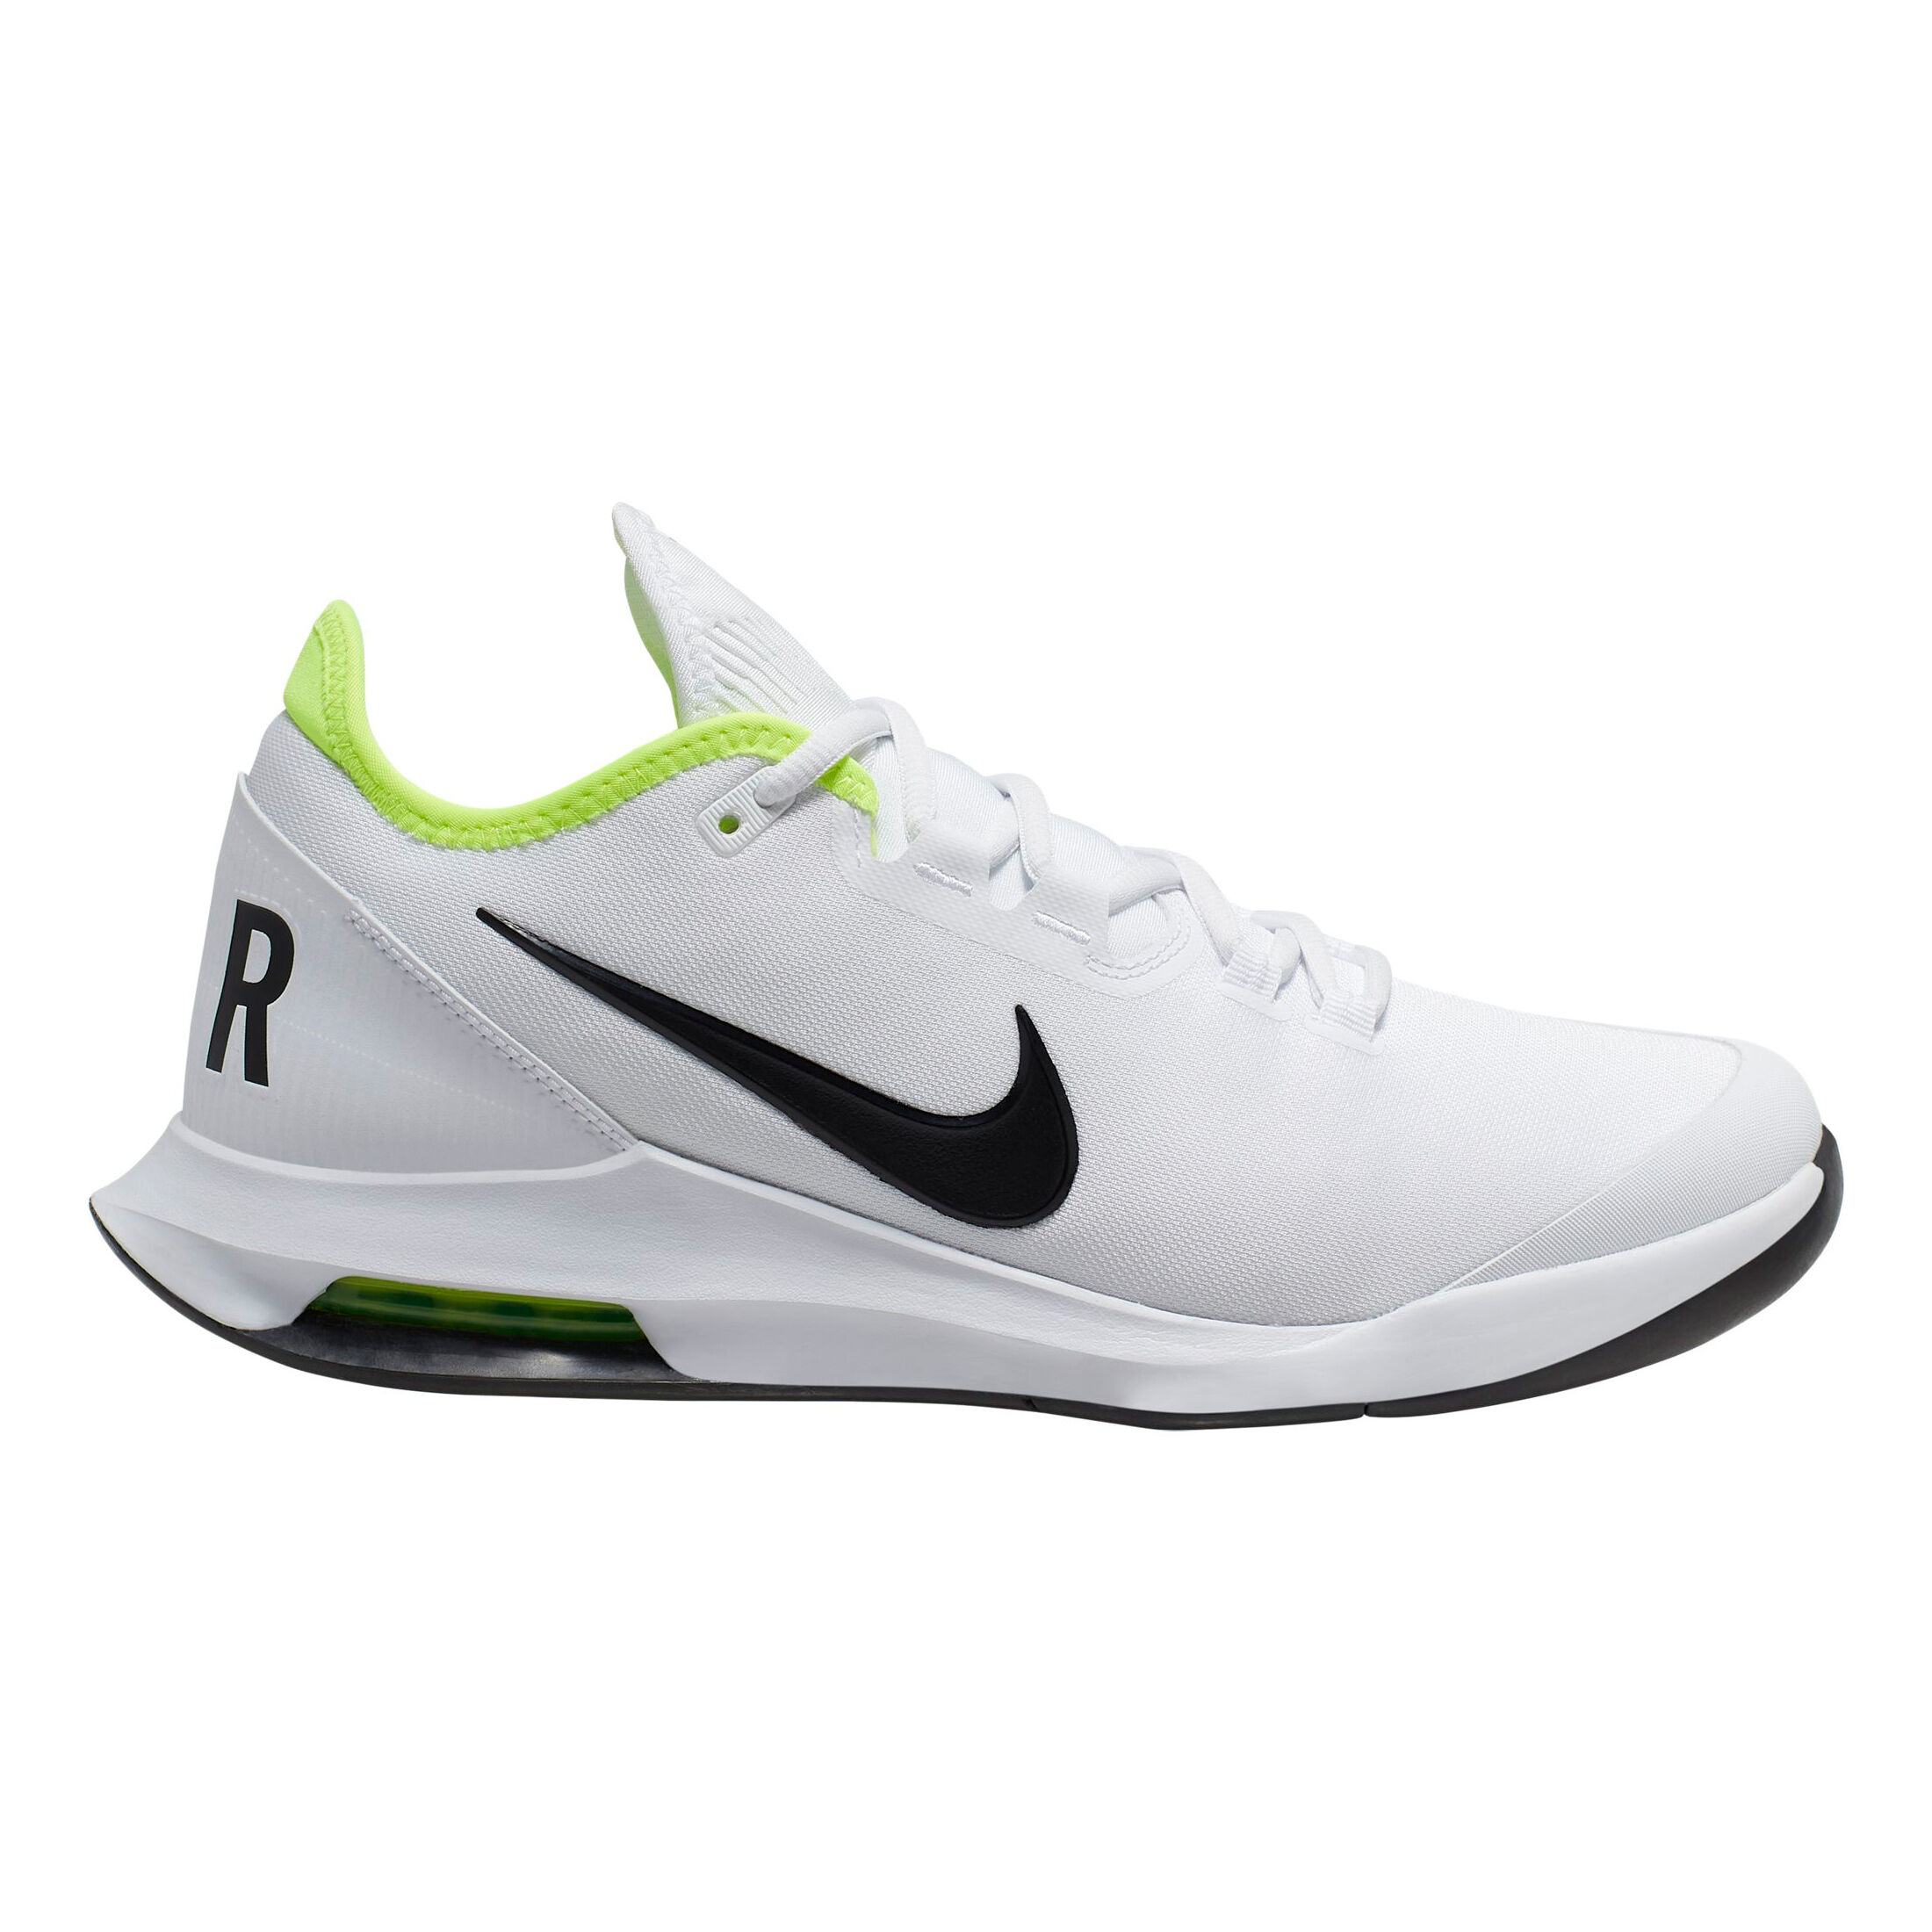 Nike Air Max Wildcard All Court Shoe Men - White, Neon Green